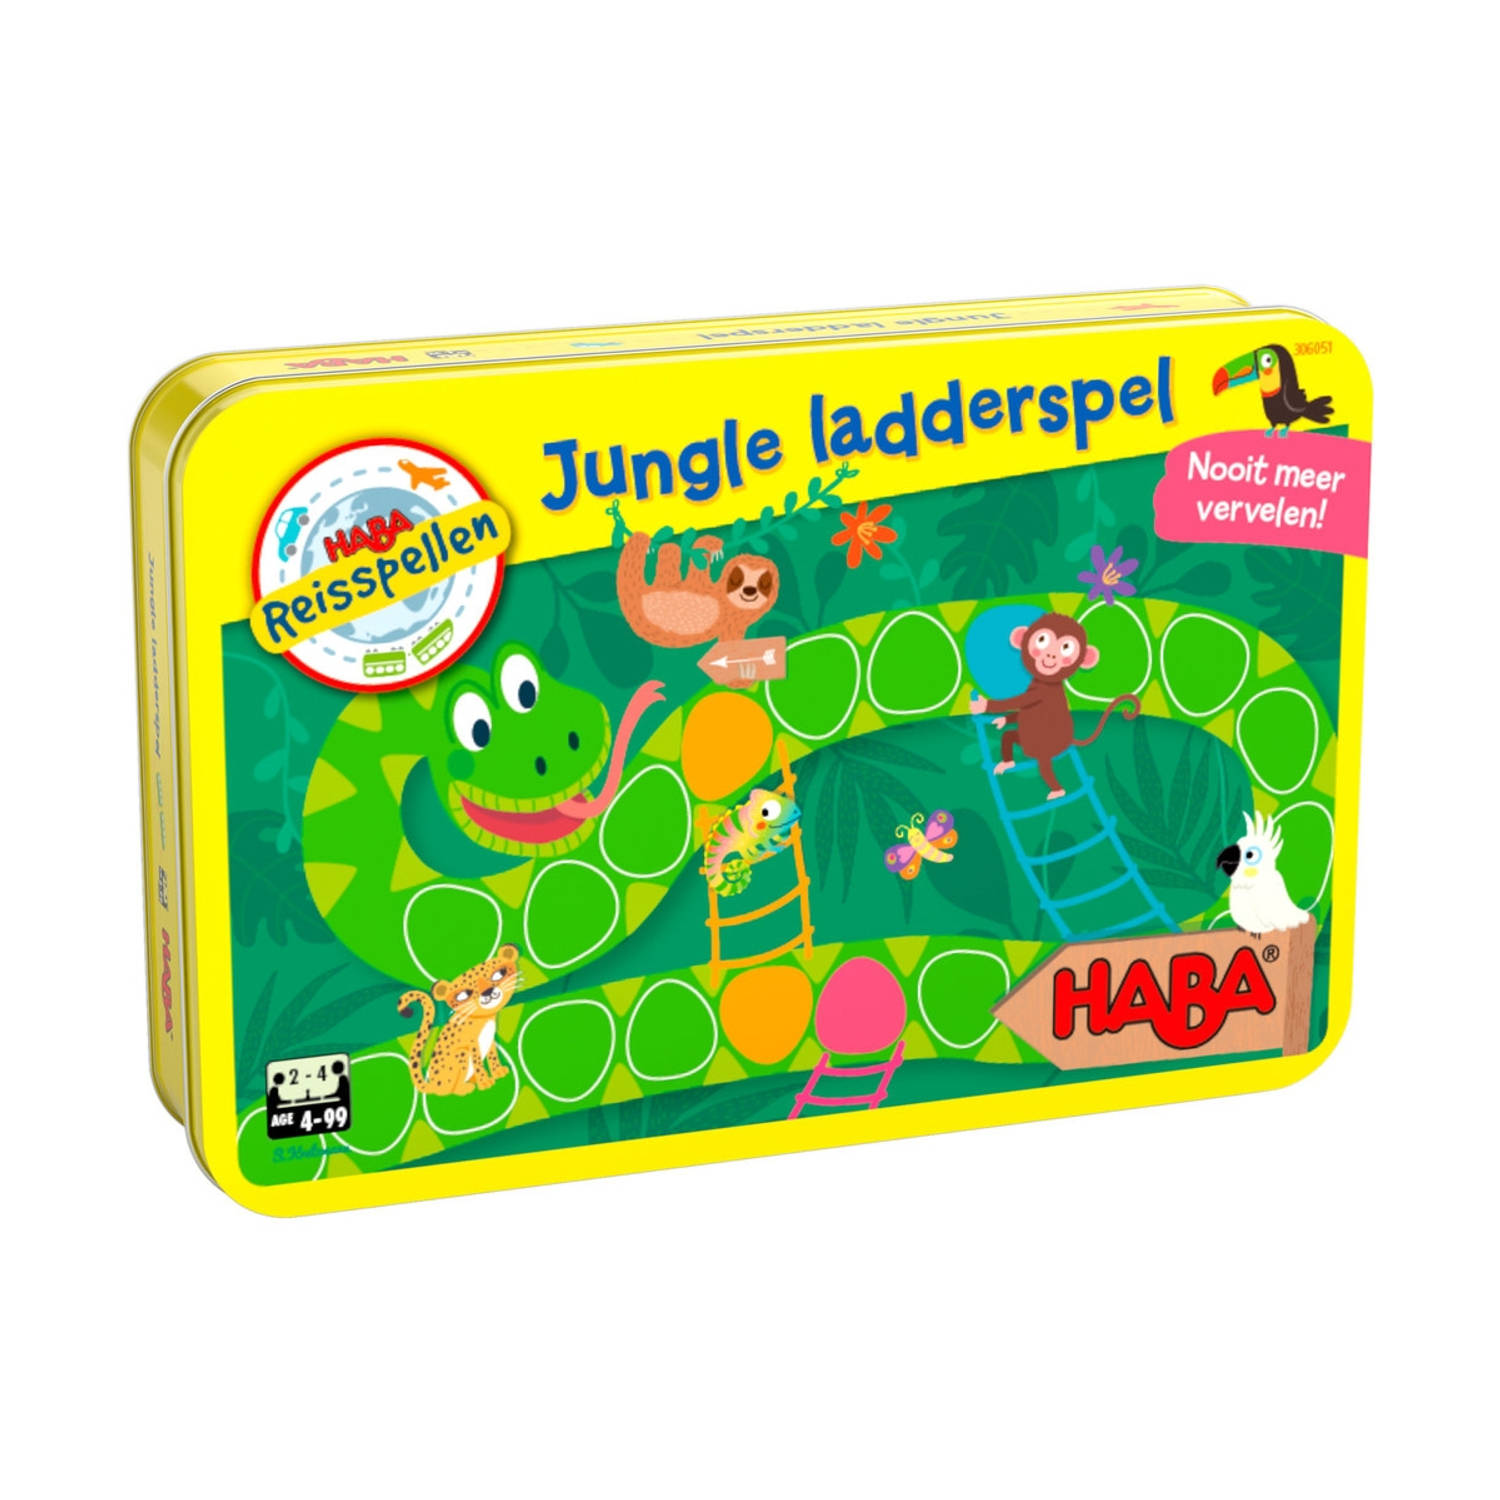 Haba reisspel Jungle ladderspel junior metaal (NL)